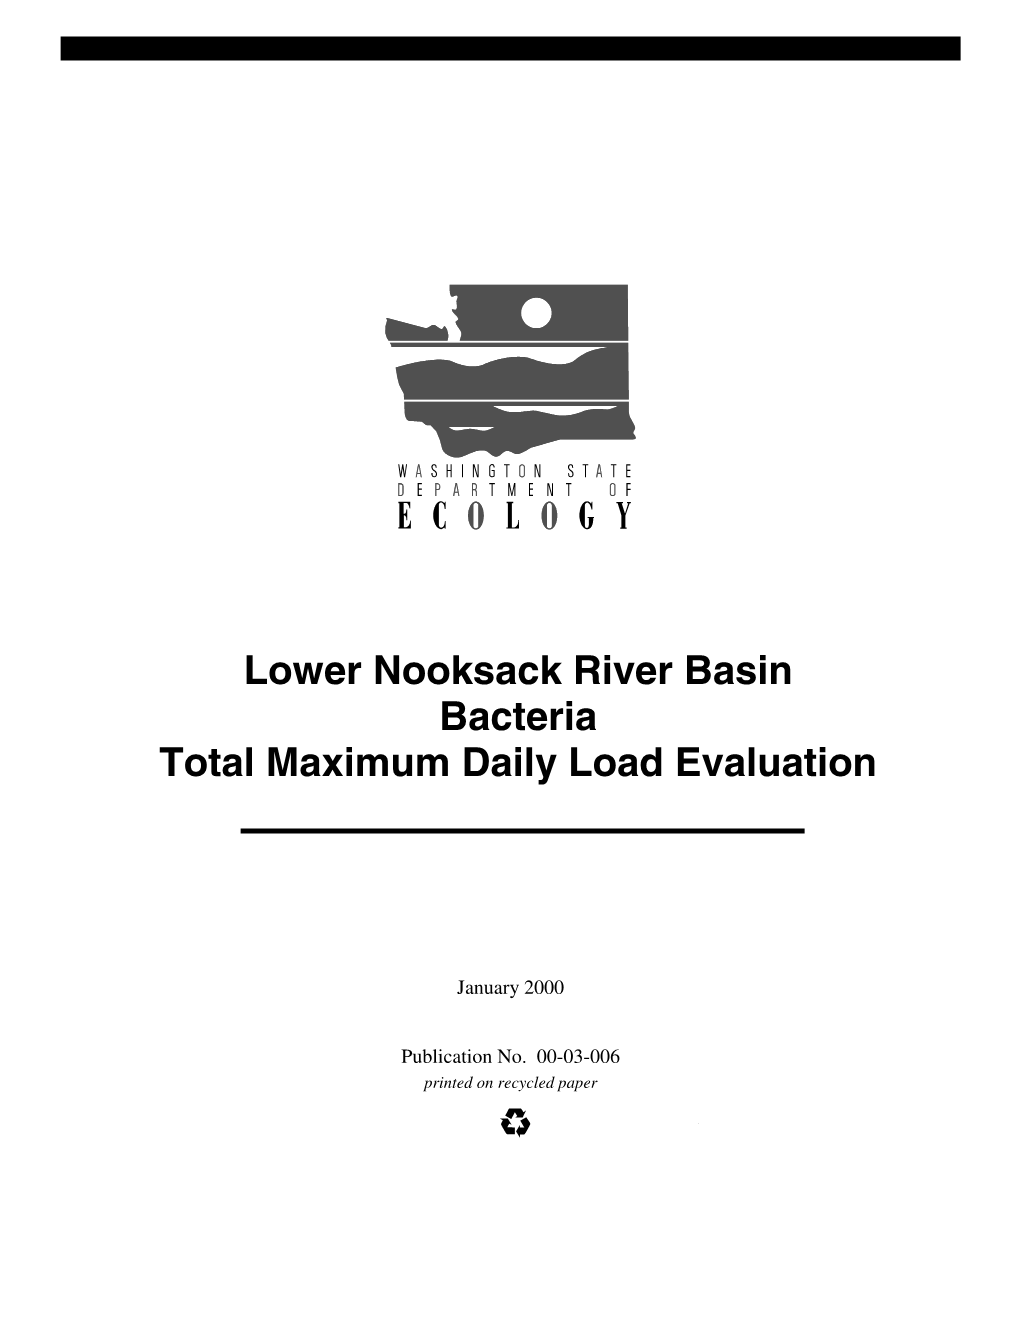 Lower Nooksack River Basin Bacteria TMDL Evaluation